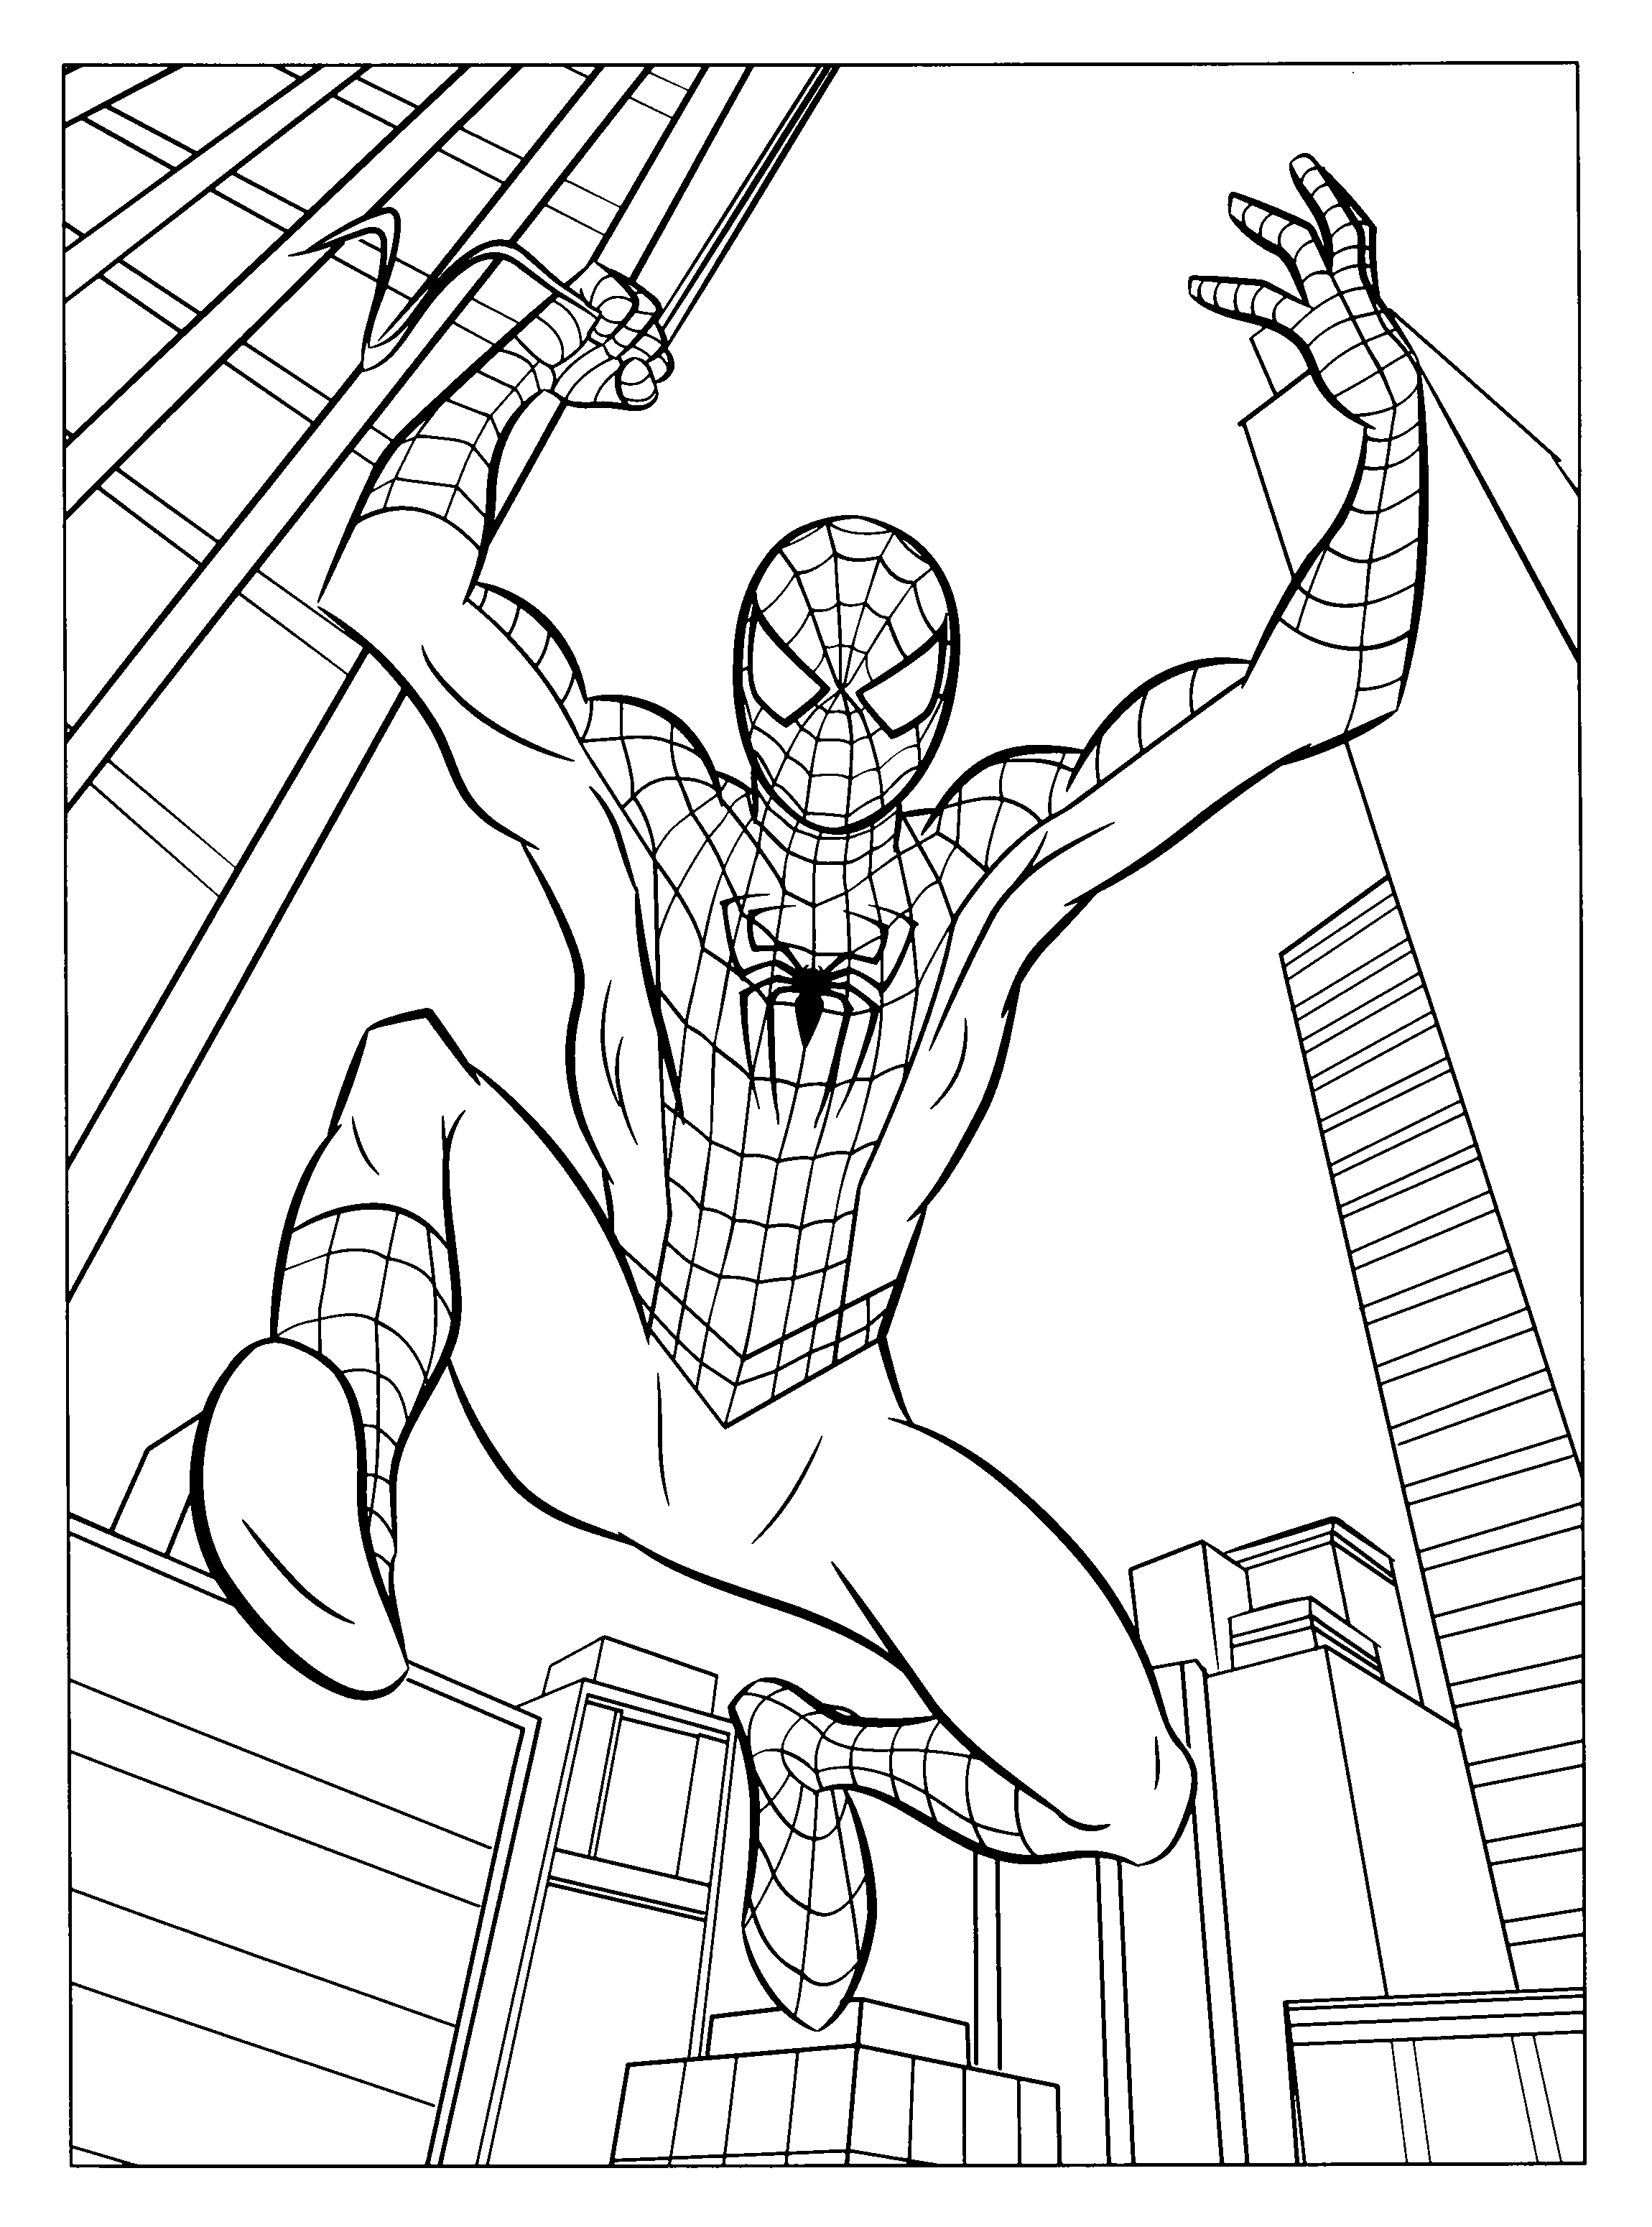 El hombre araña salta a través de edificios